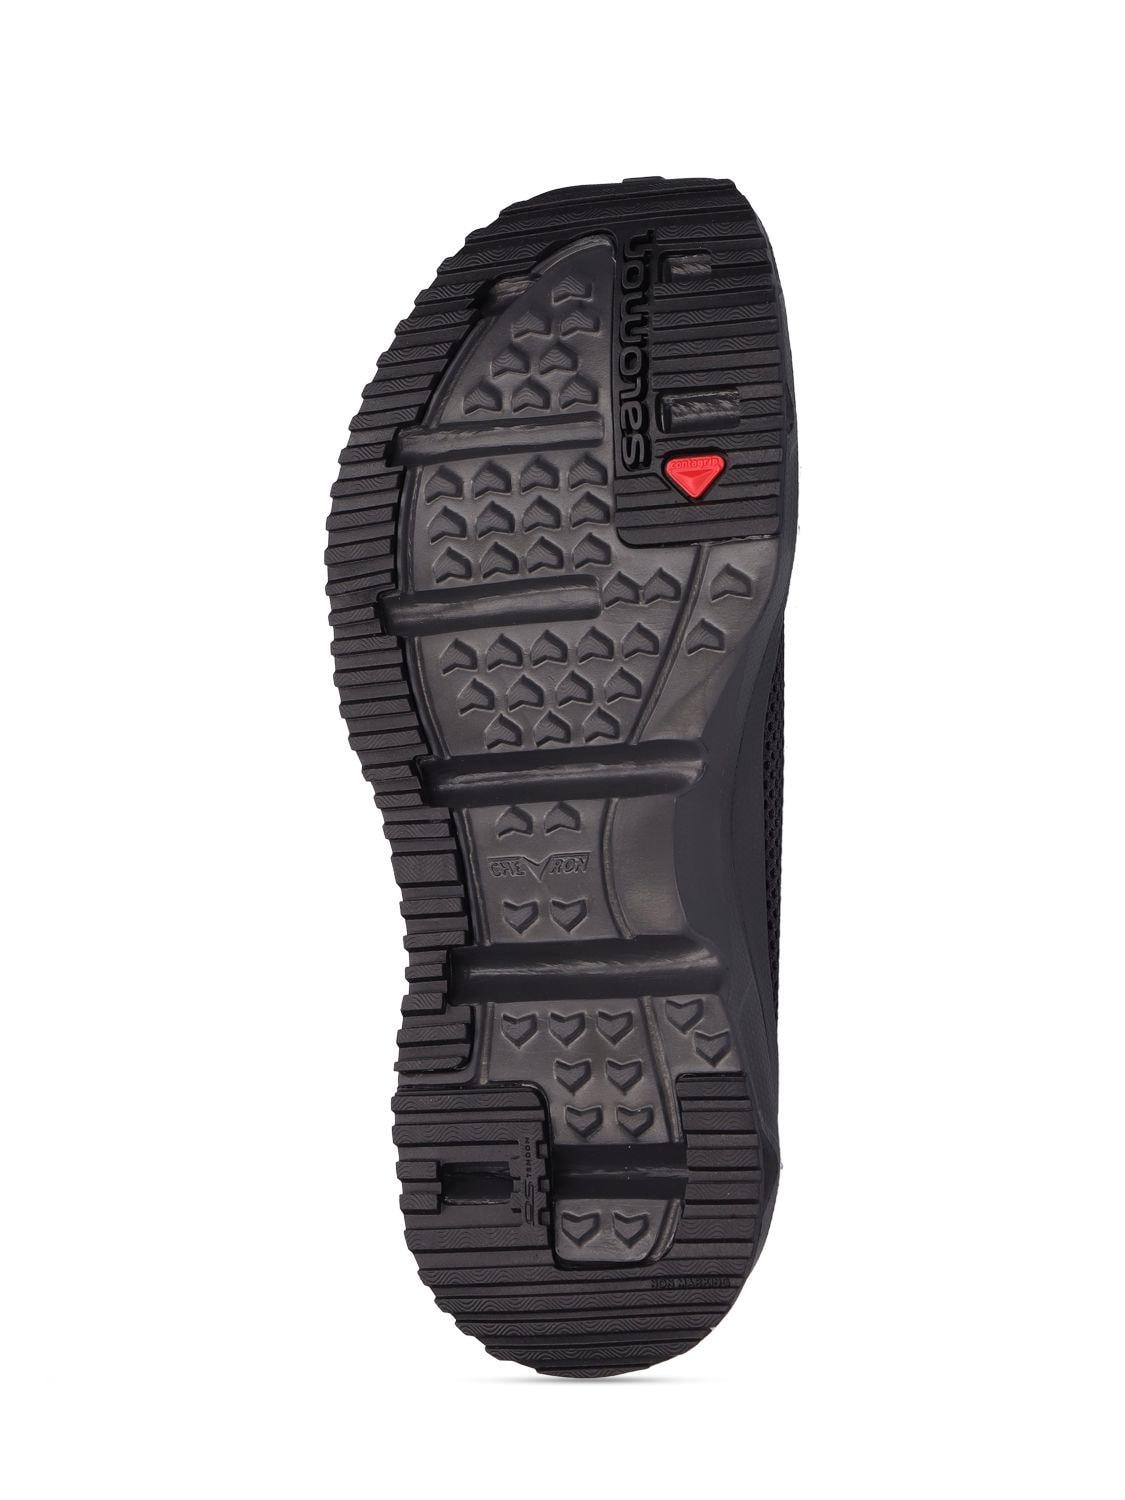 Salomon Rx Slide 3.0 Sneakers in Black | Lyst